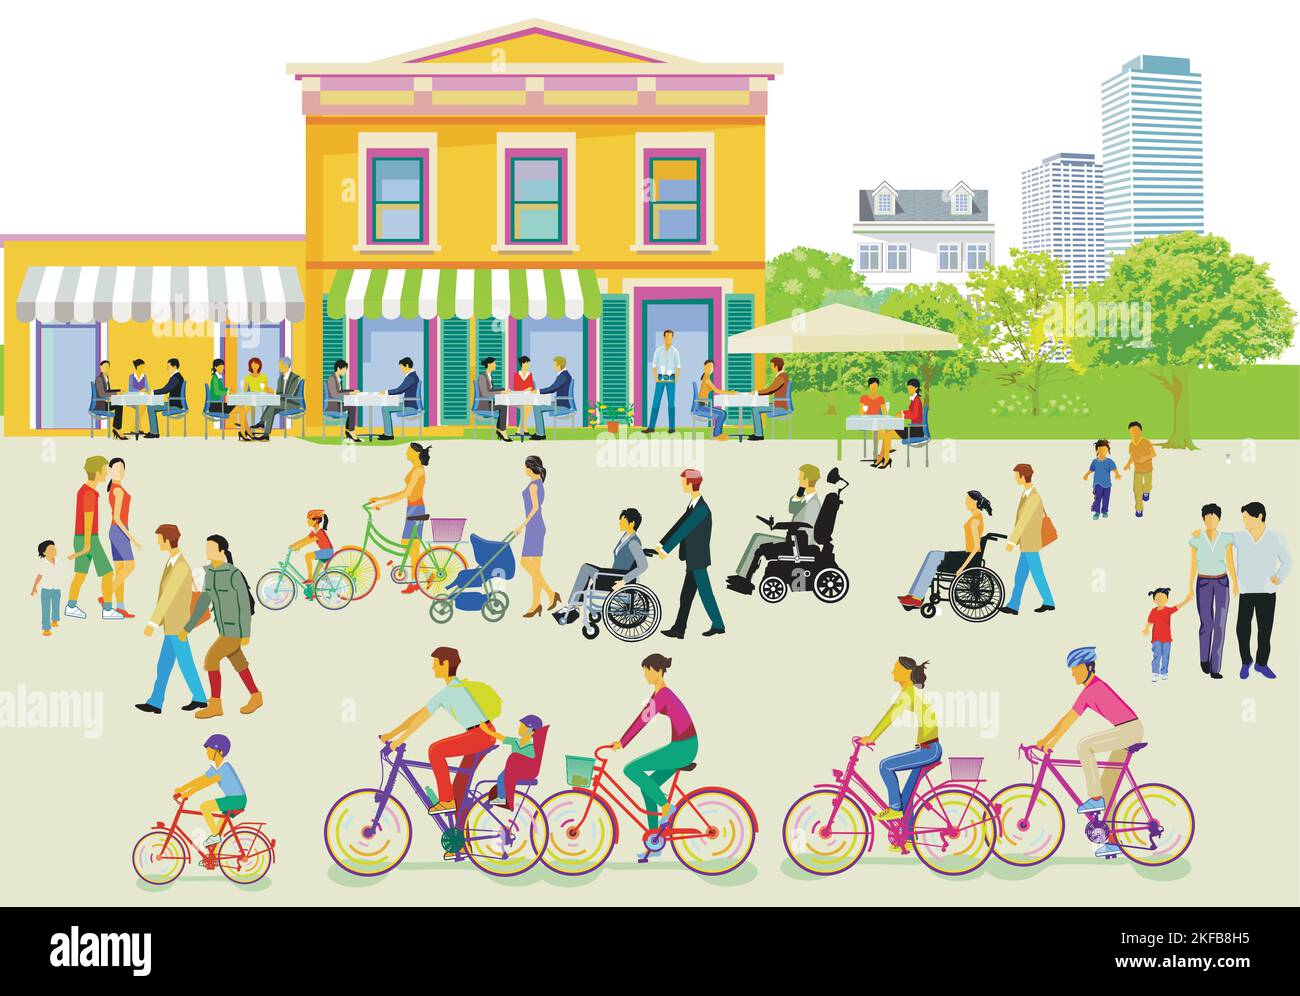 Fußgänger und Behinderte im Stadtpark, Illustration Stock Vektor